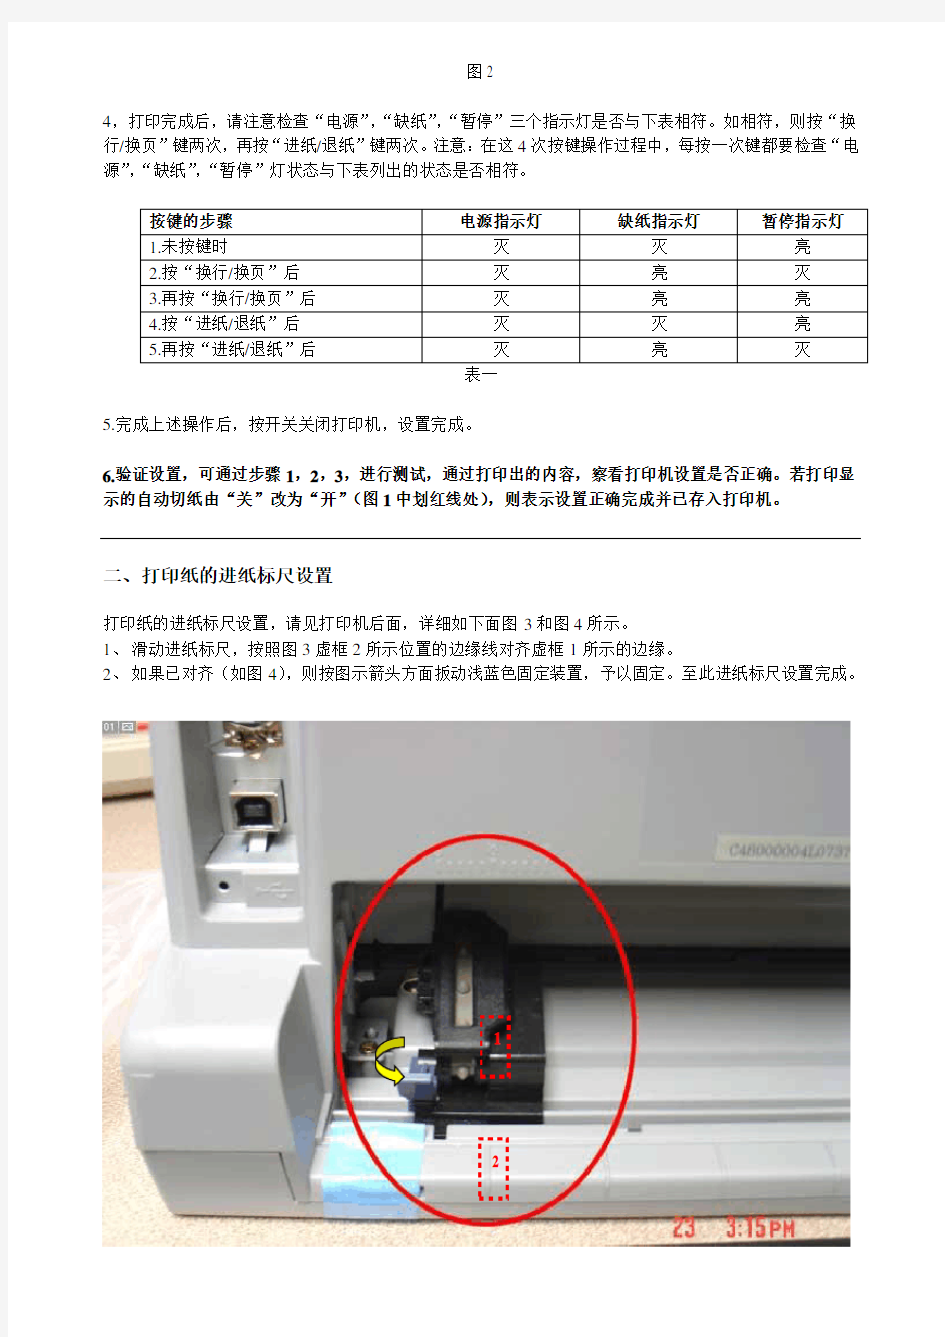 Epson LQ-630K、LQ-635K、LQ-730K针式打印机最全设置教程(连续打印、高速打印、驱动安装)